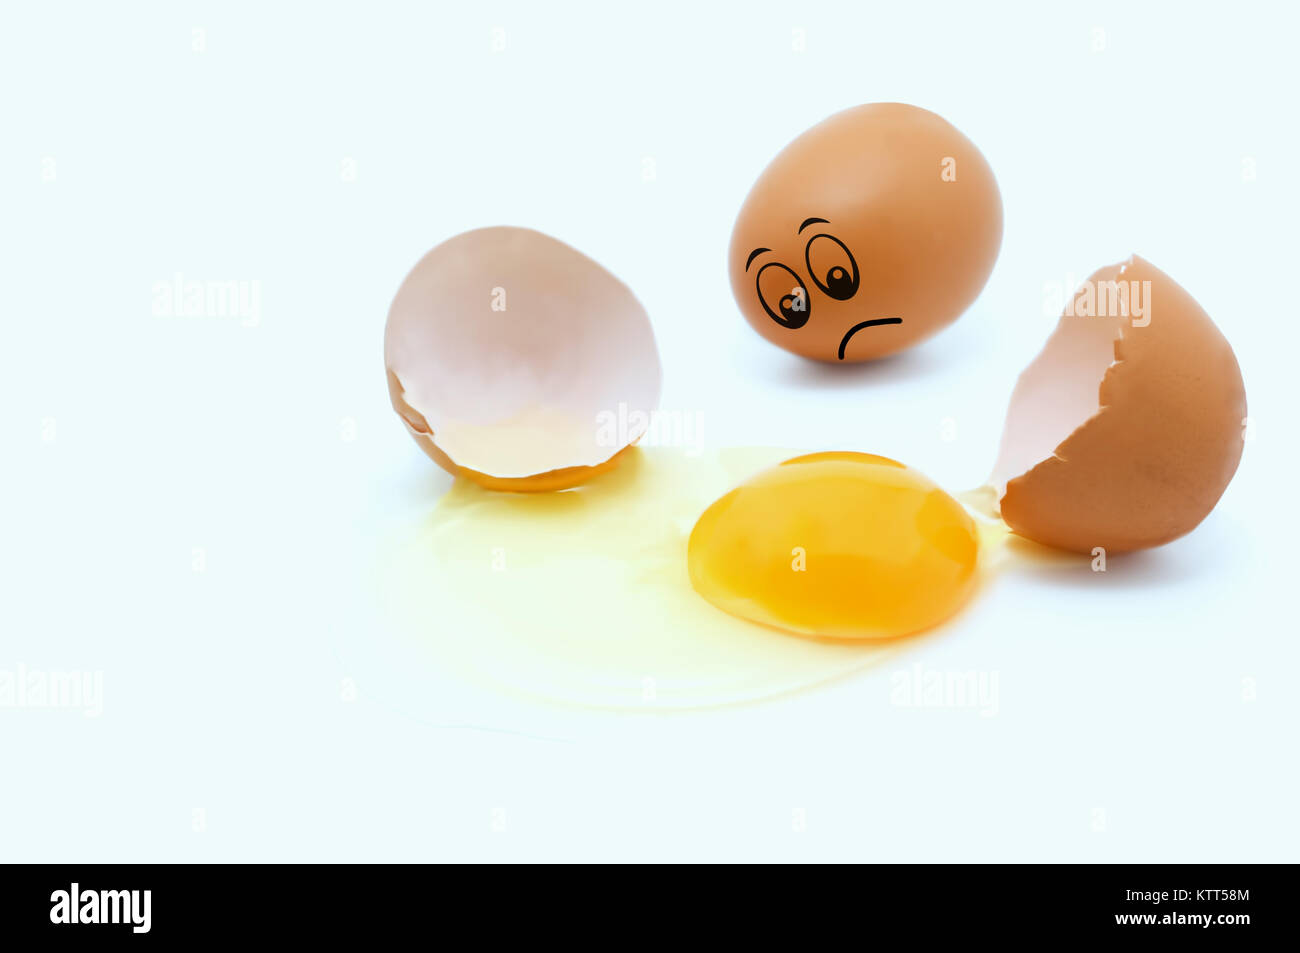 Broken Egg and an egg with a sad face Stock Photo